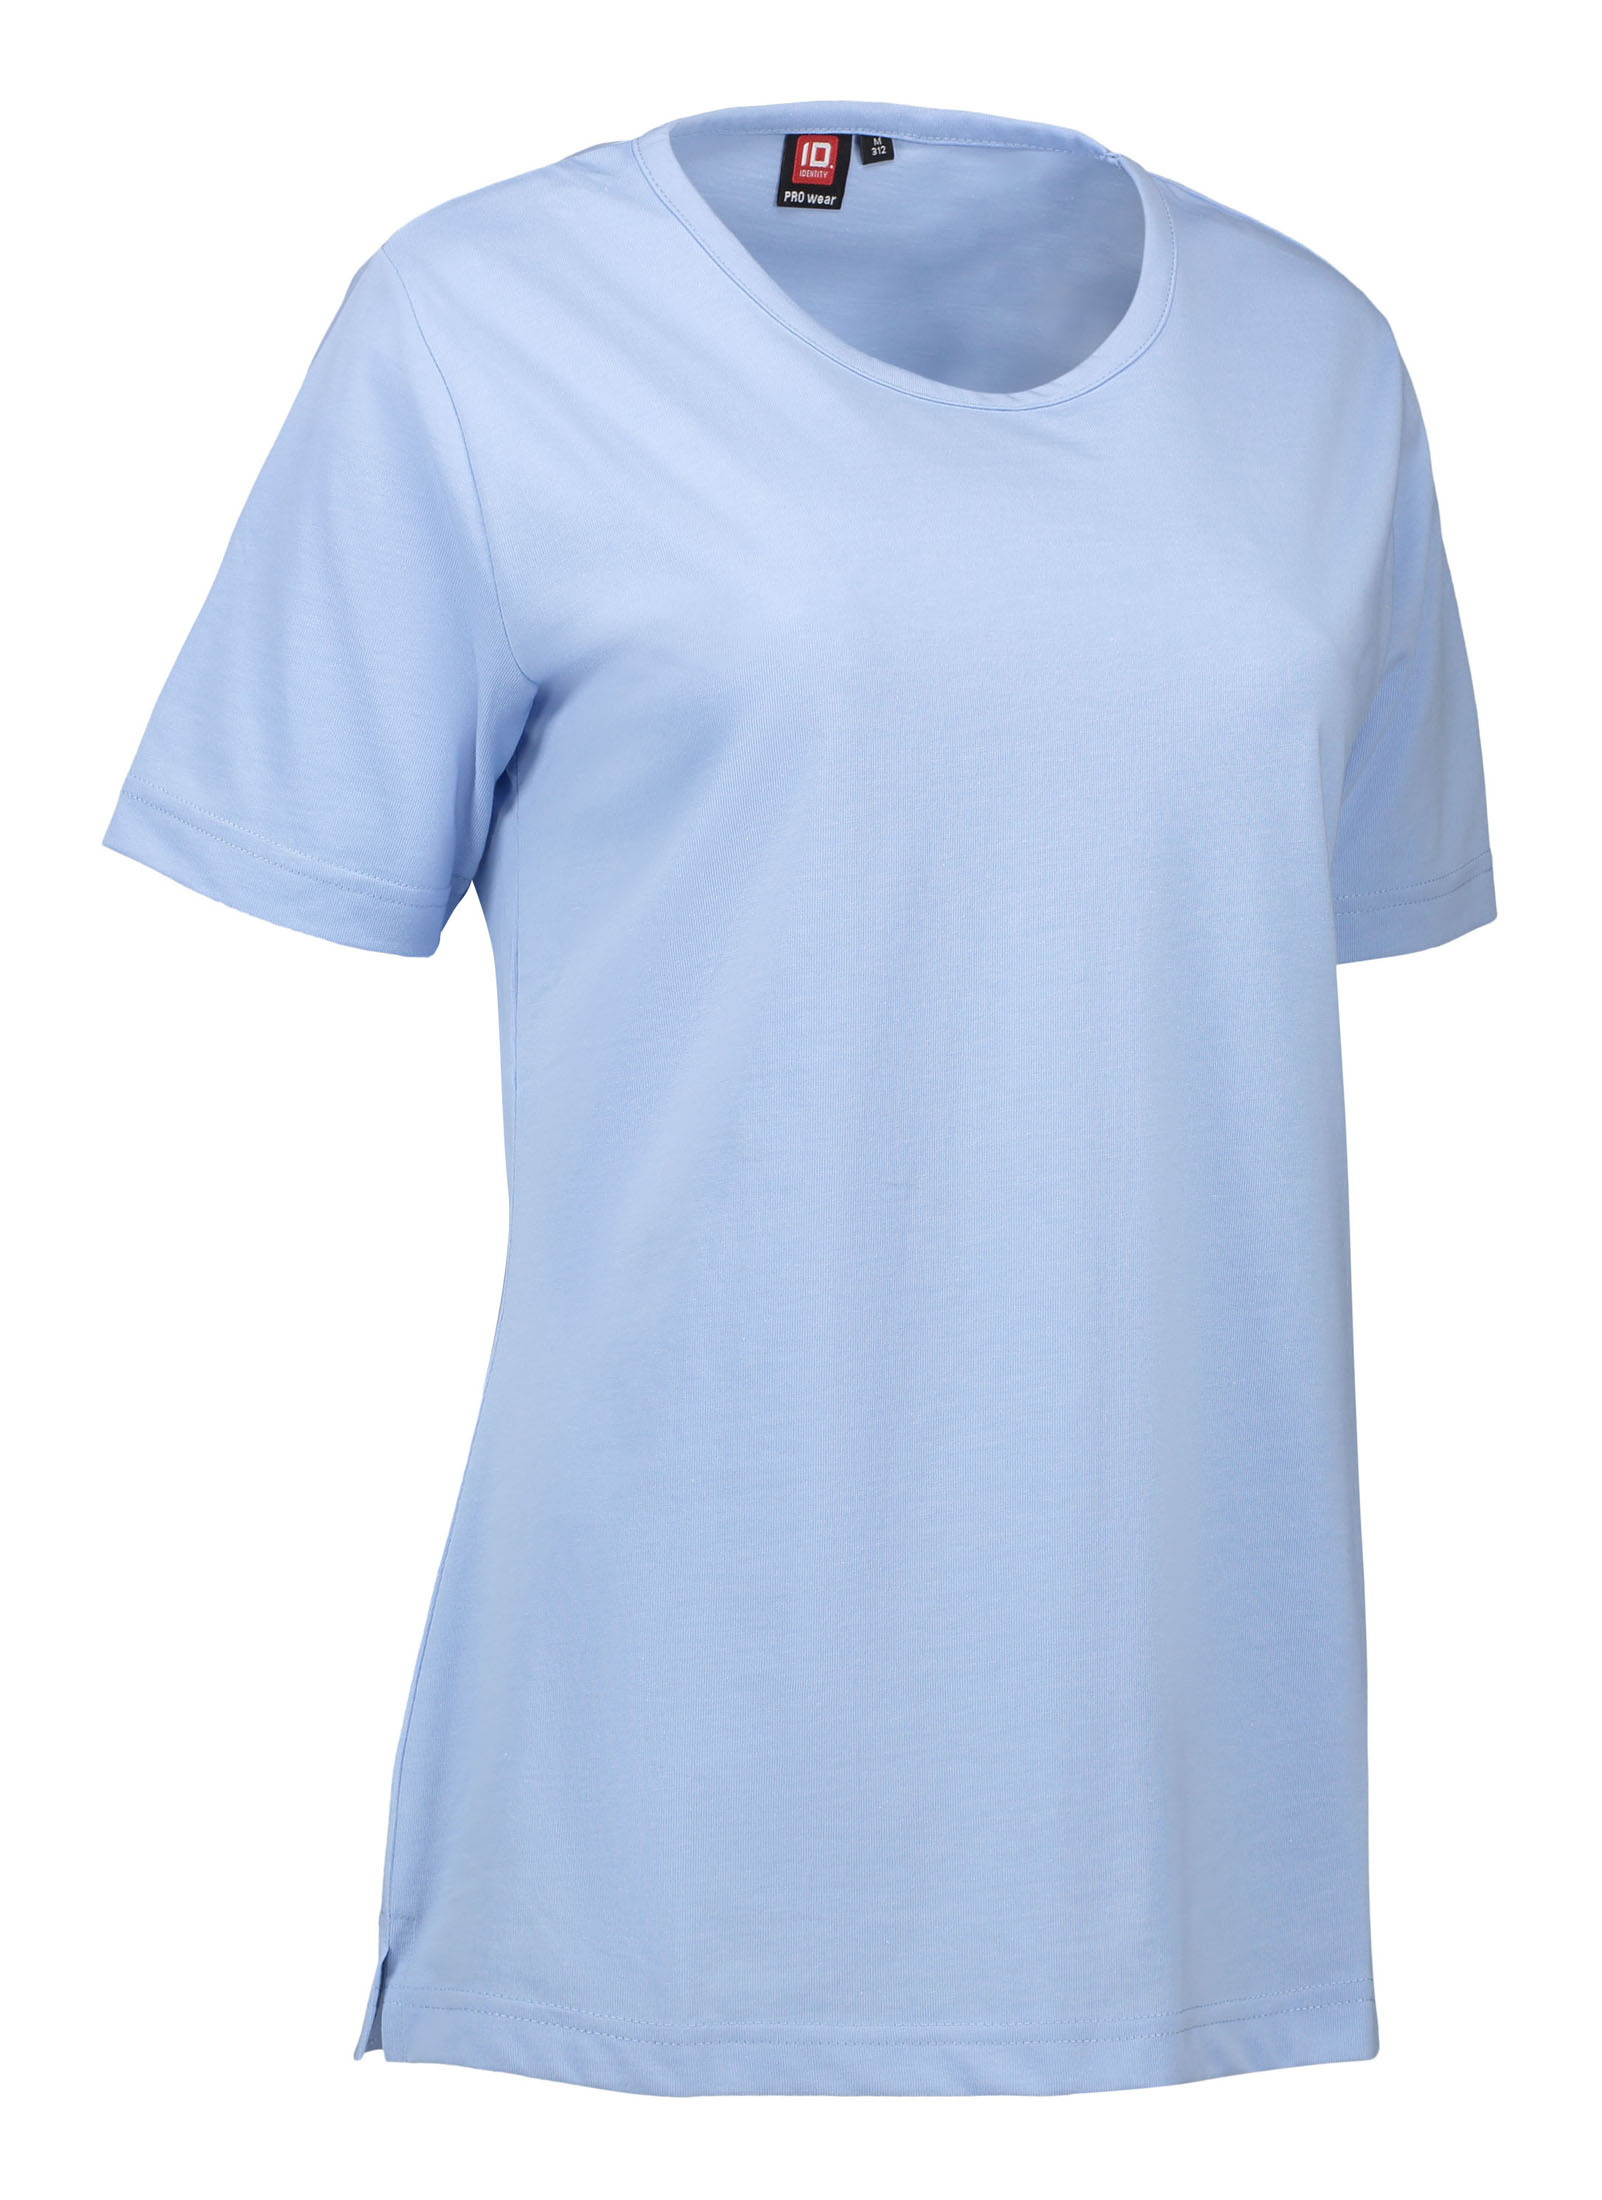 Pro Wear t-shirt, dam - Ljusblå